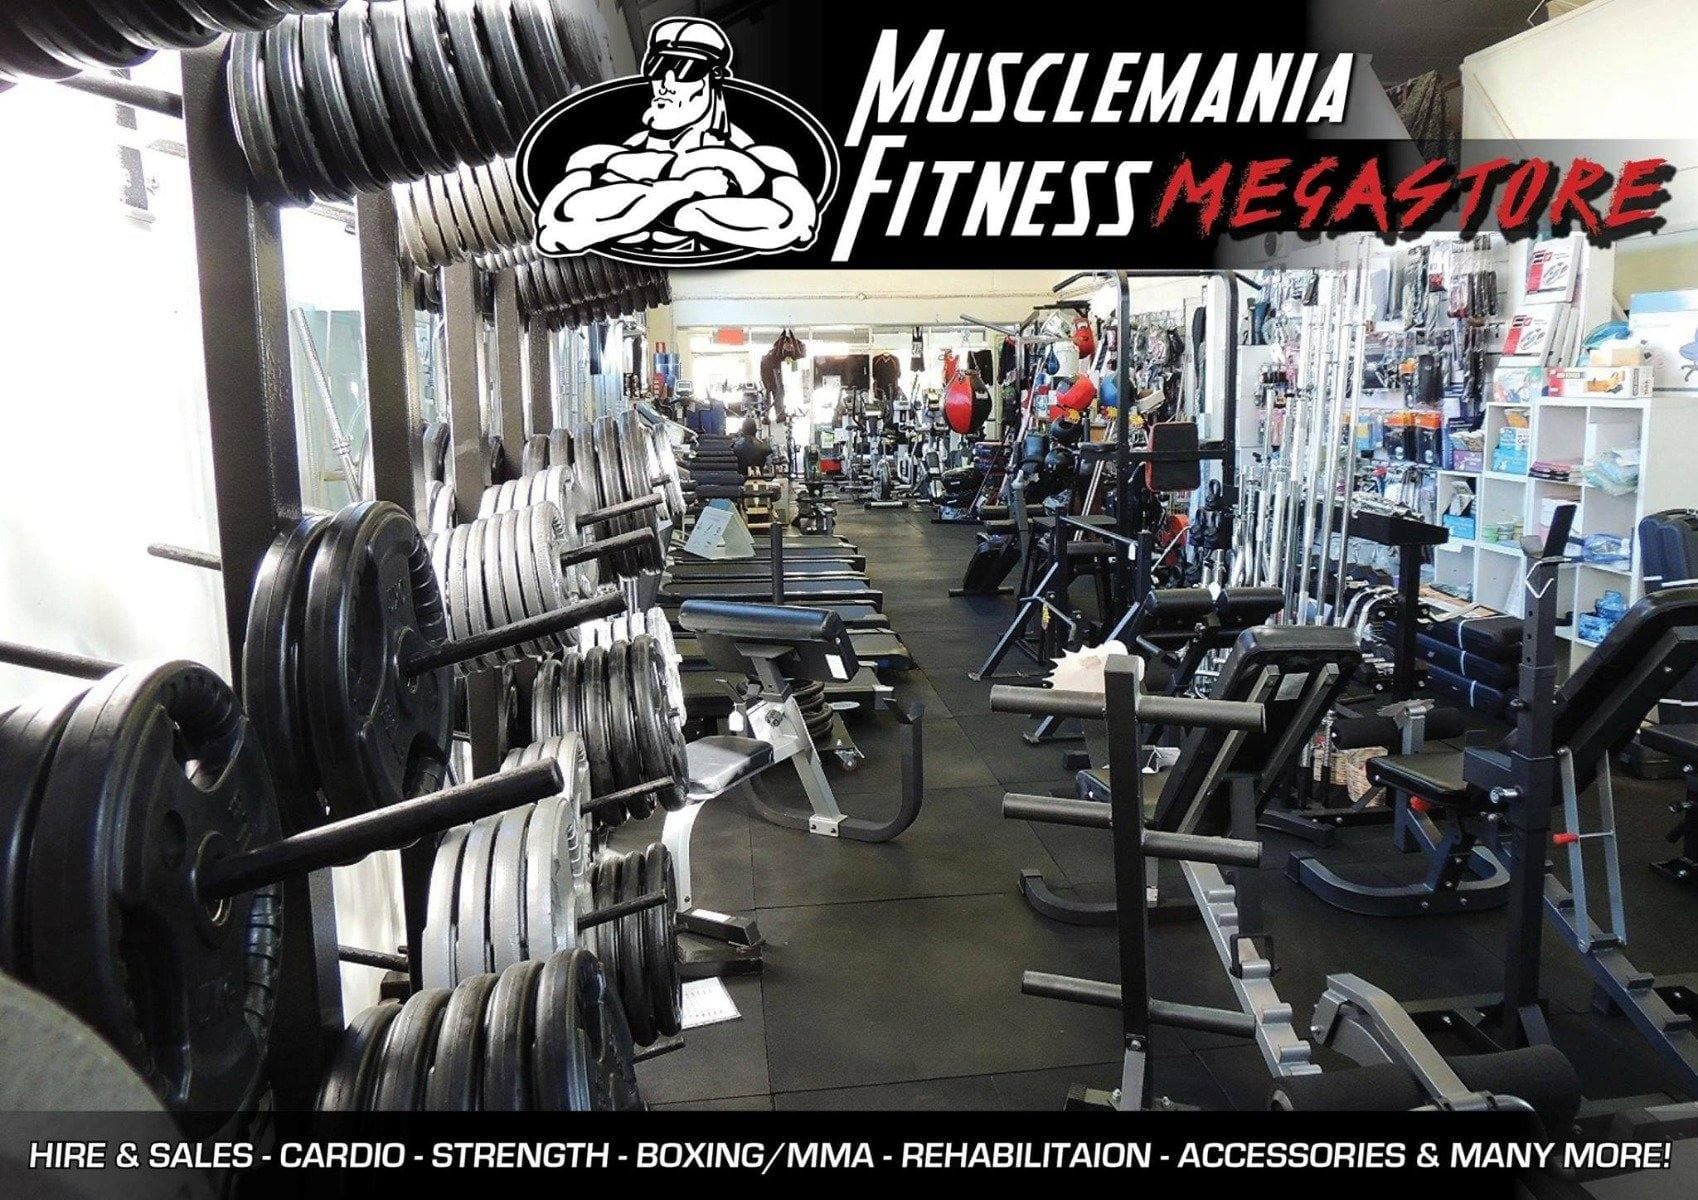 Bodyworx Premium Quality Colour Olympic Bumper Plates - Musclemania Fitness MegaStore